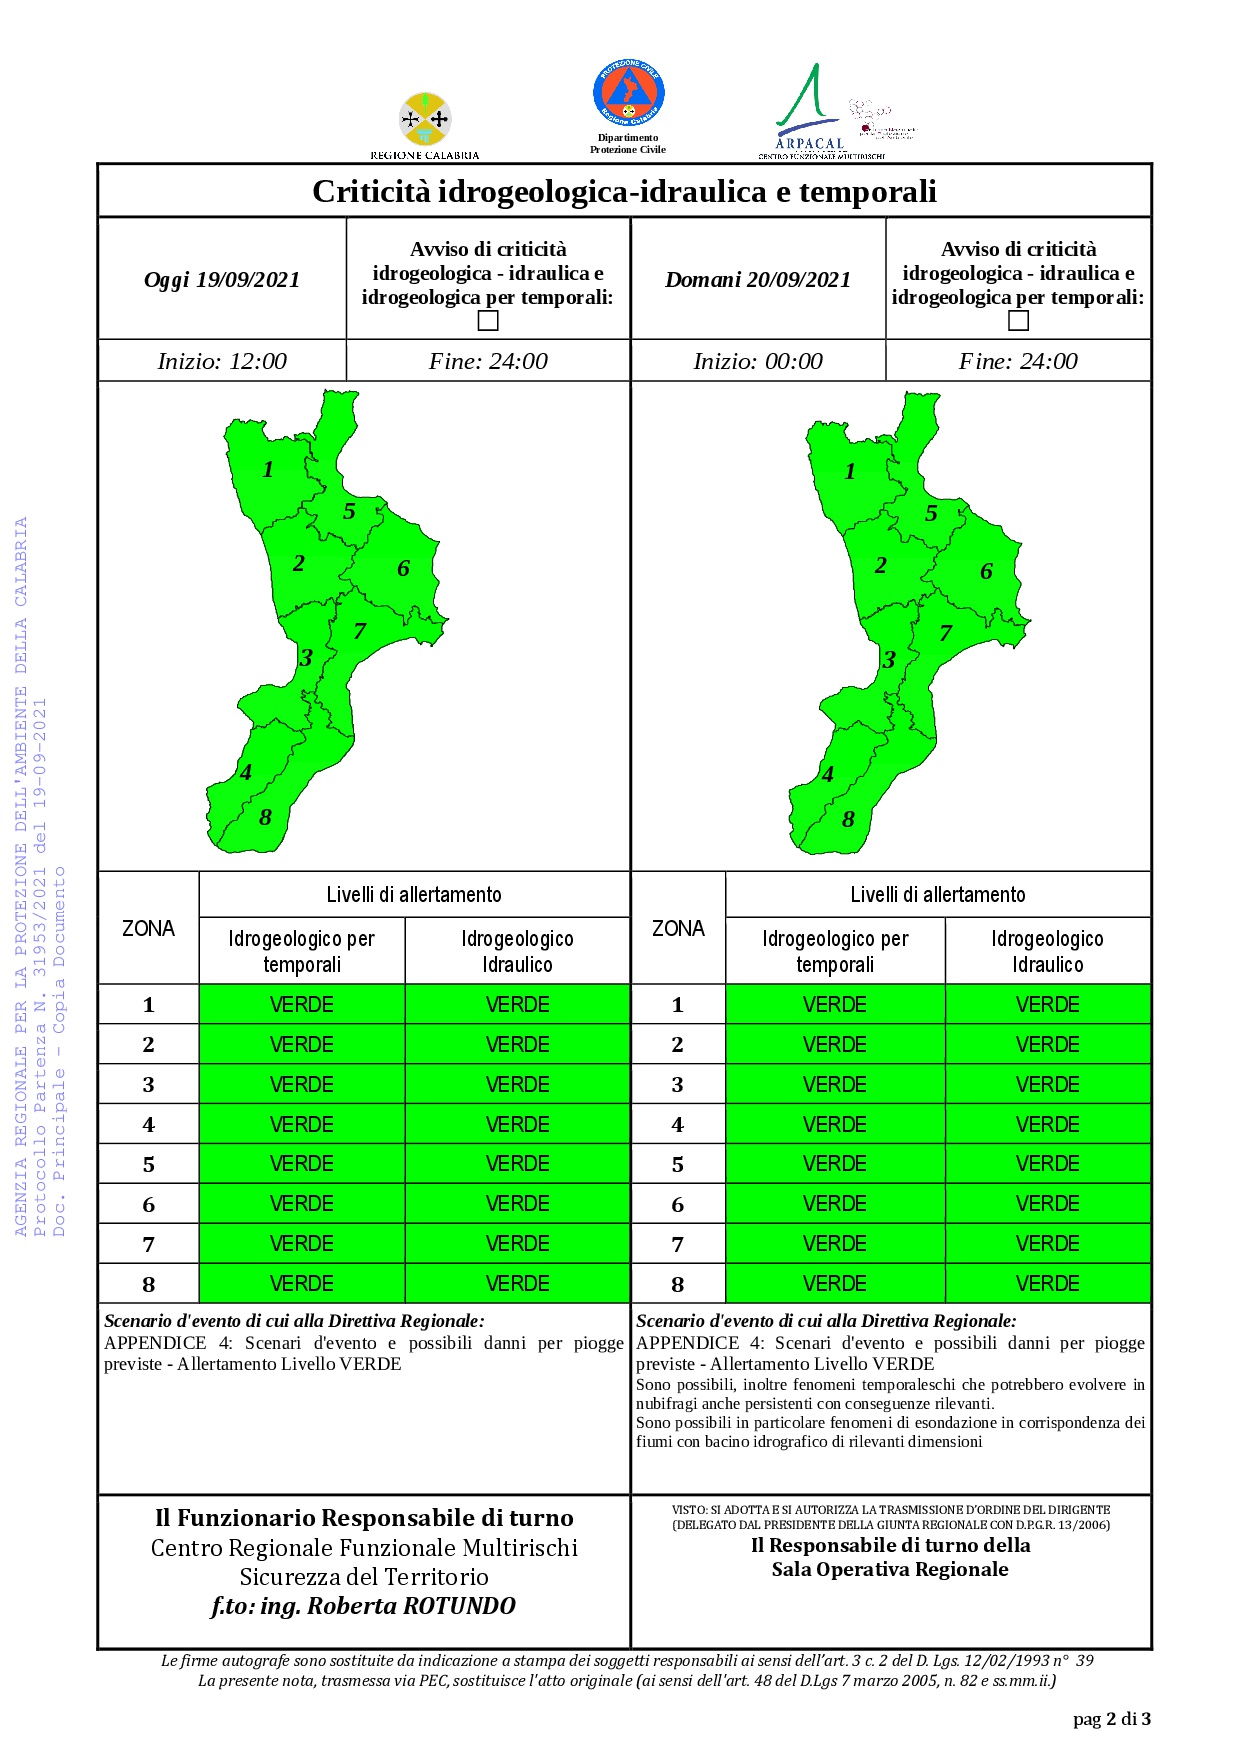 Criticità idrogeologica-idraulica e temporali in Calabria 19-09-2021